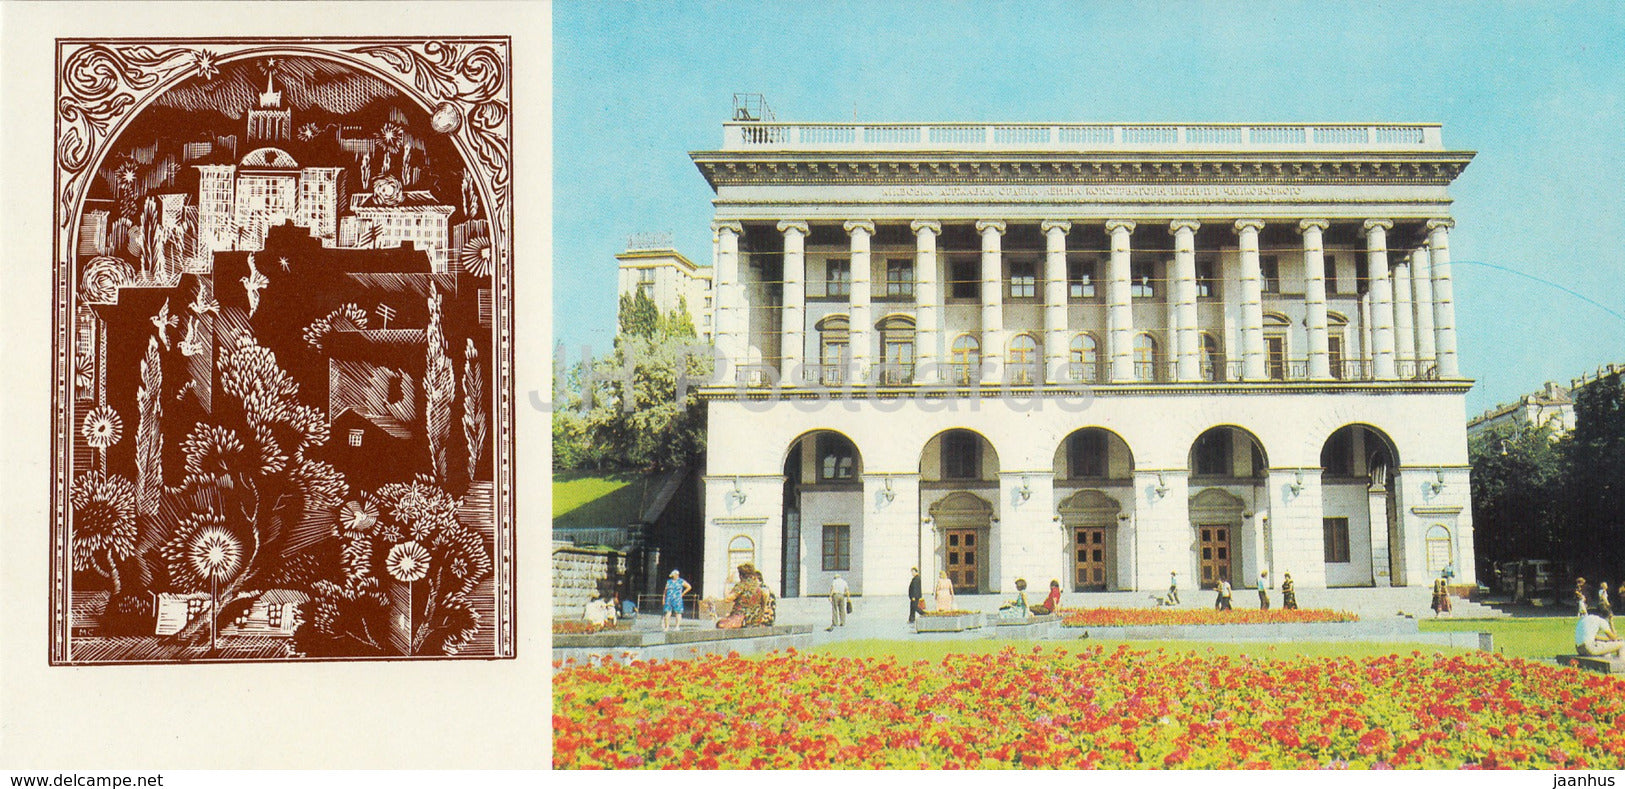 Kyiv - Kiev - Tchaikovsky Conservatory - 1985 - Ukraine USSR - unused - JH Postcards